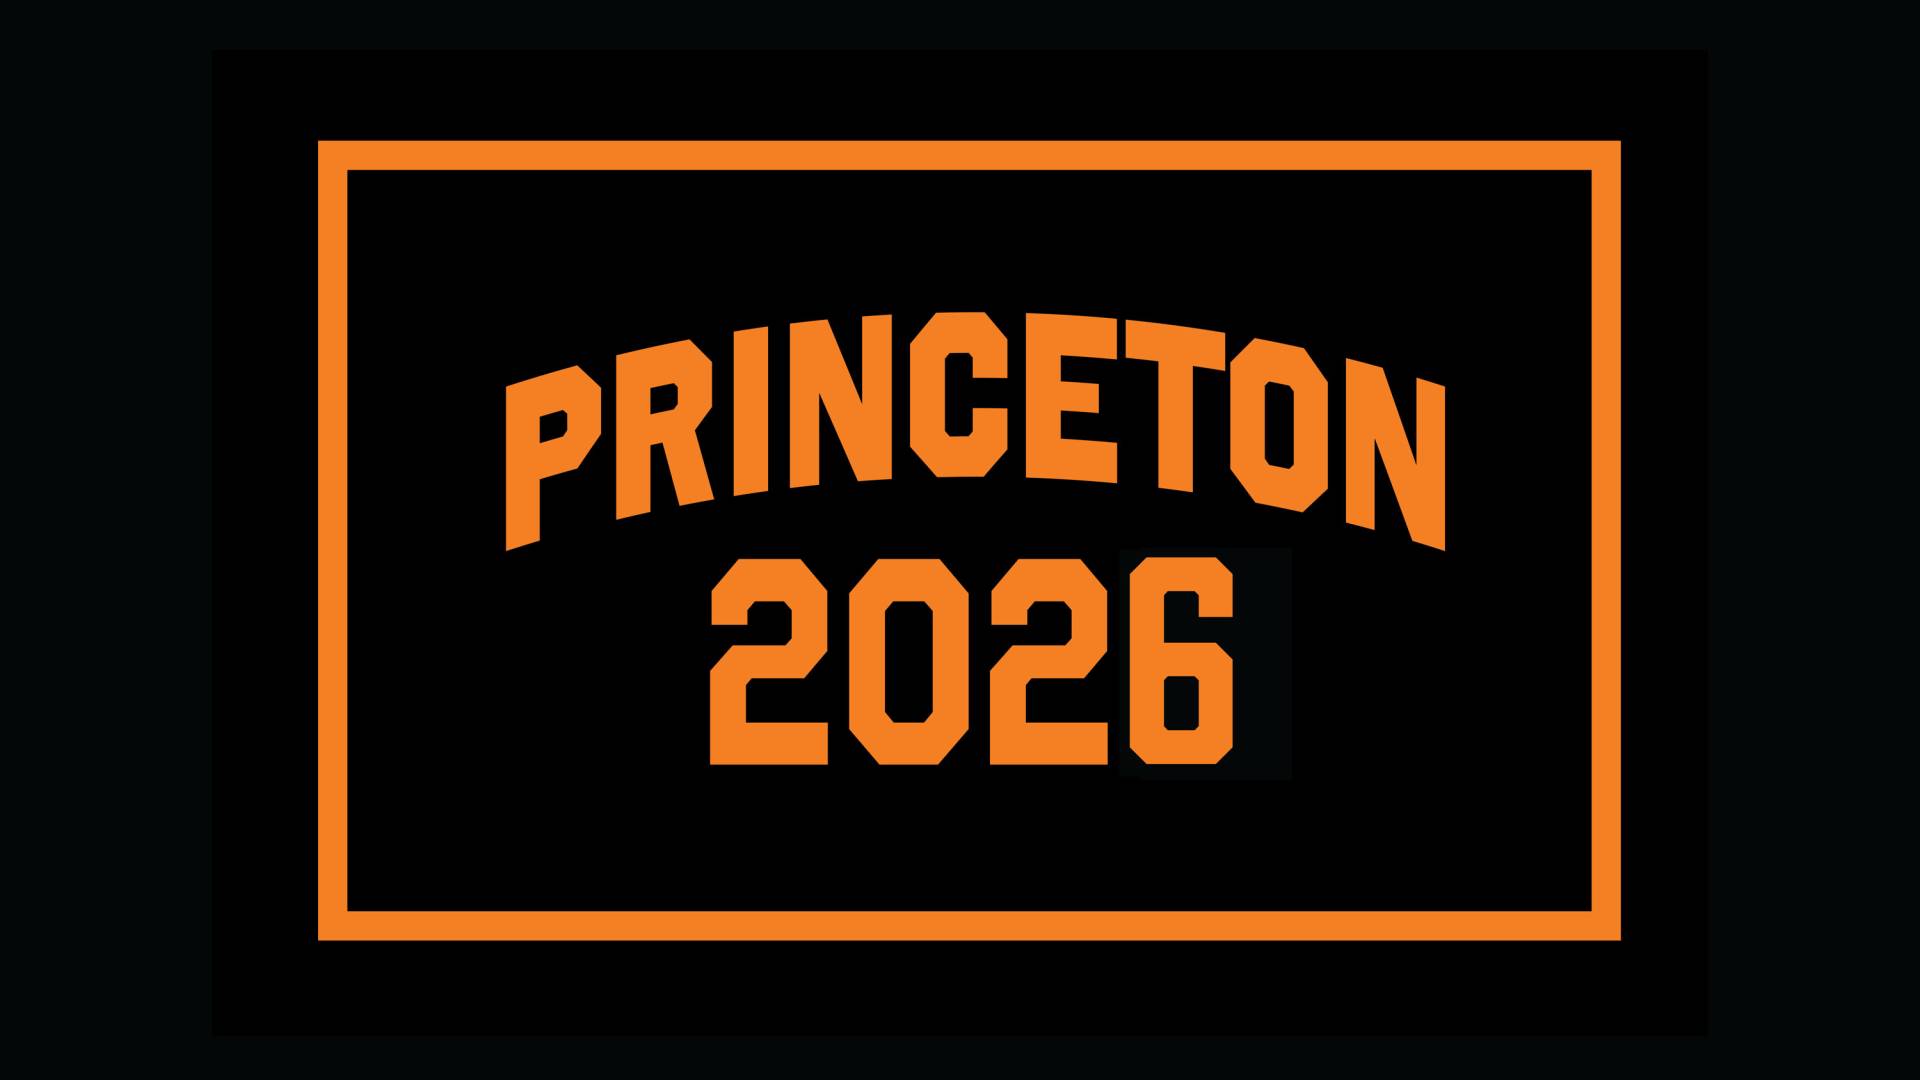 Princeton 2026